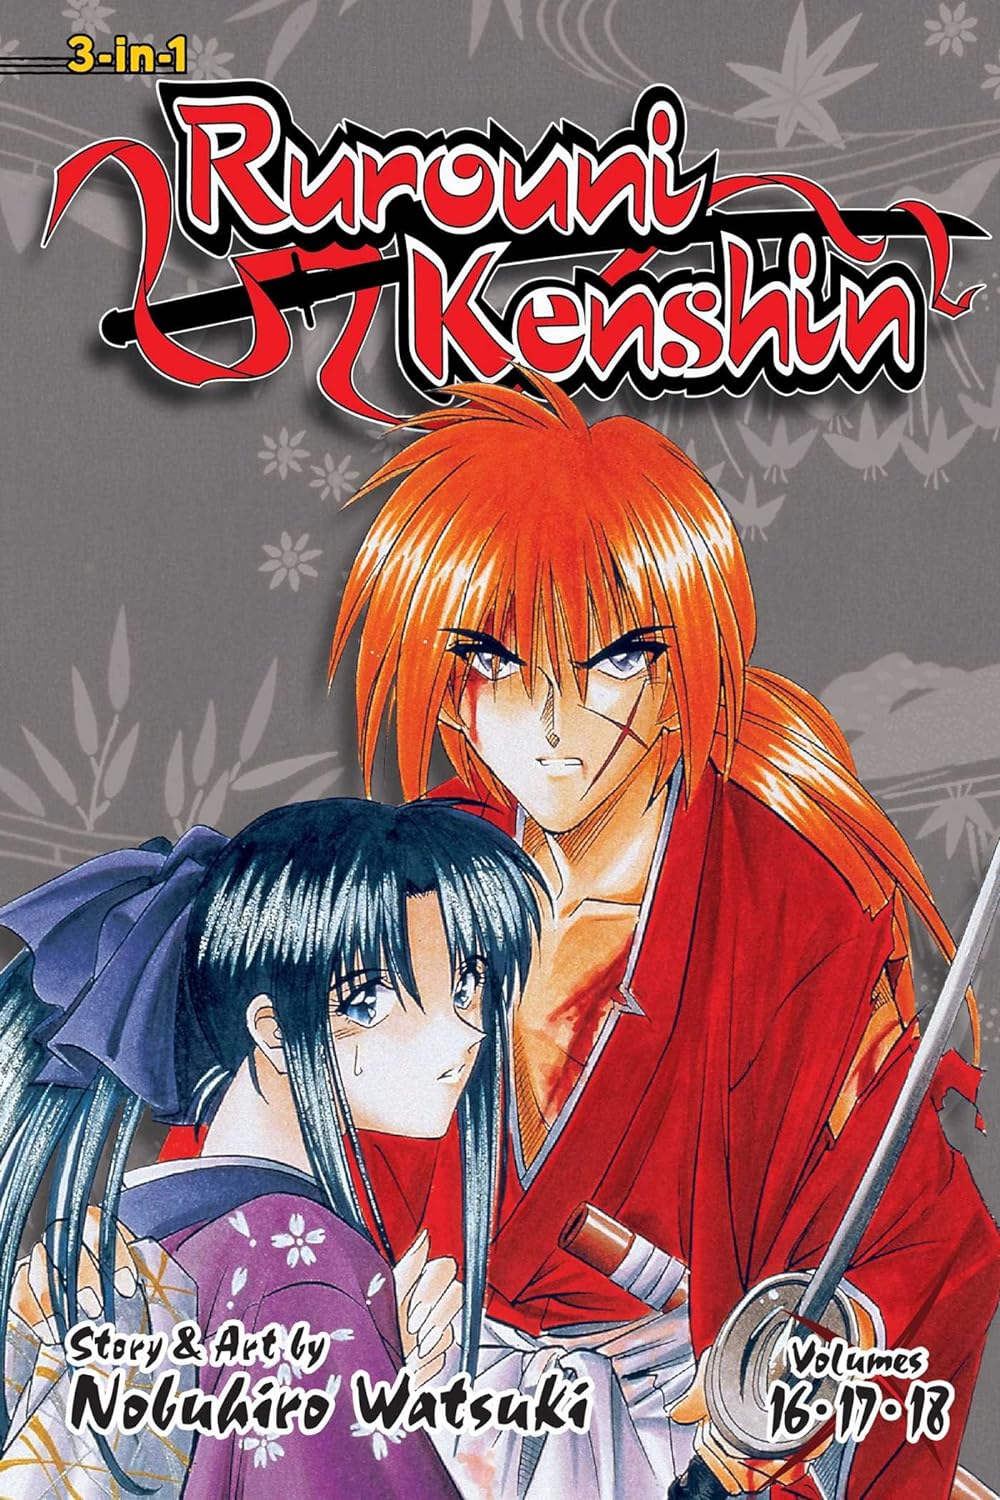 Rurouni Kenshin Volume 16-18 (3-in-1 Edition)